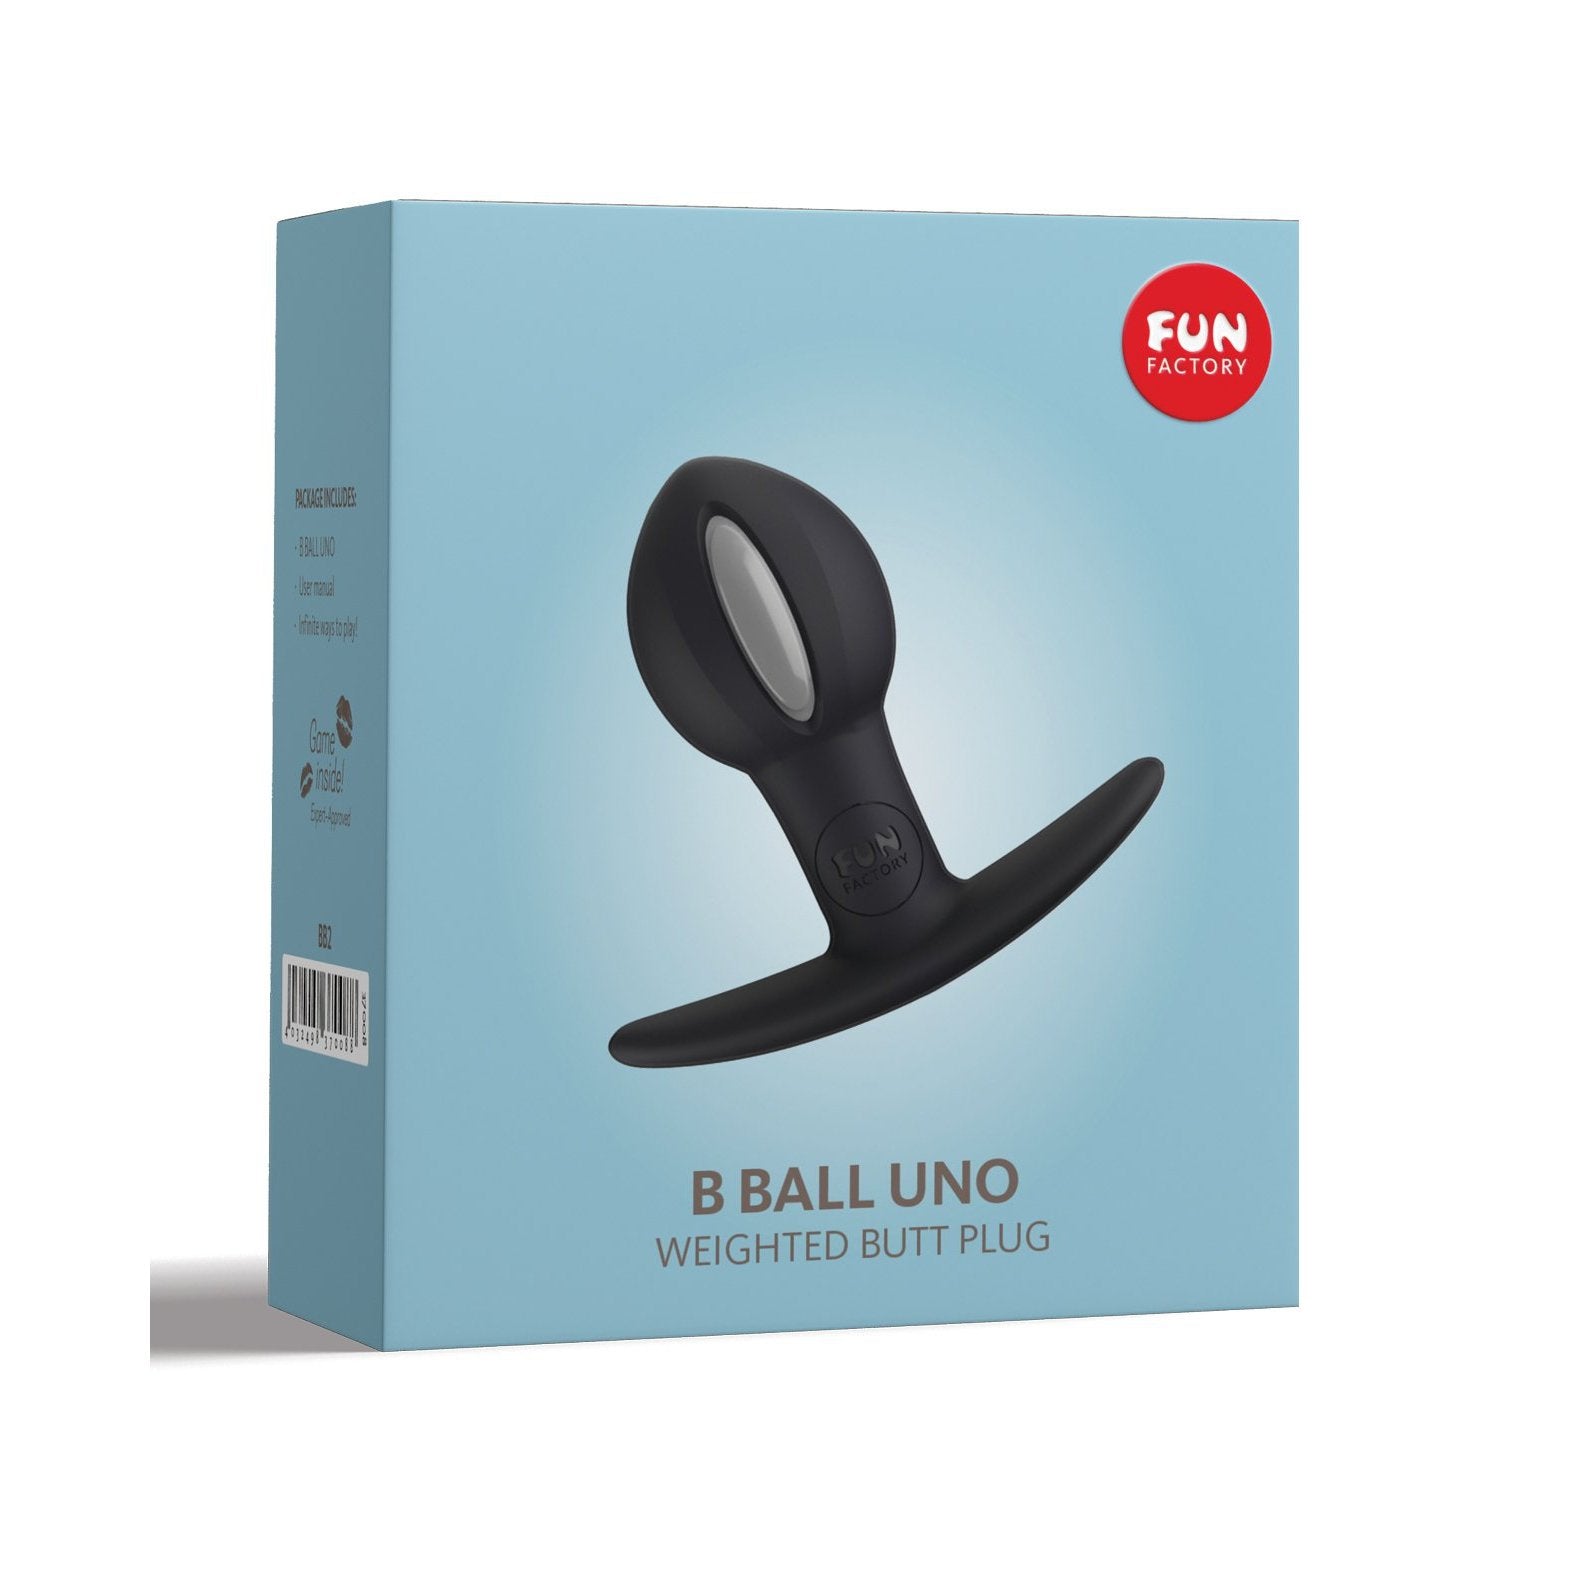 Fun Factory B Ball Uno Weighted Ball Butt Plug